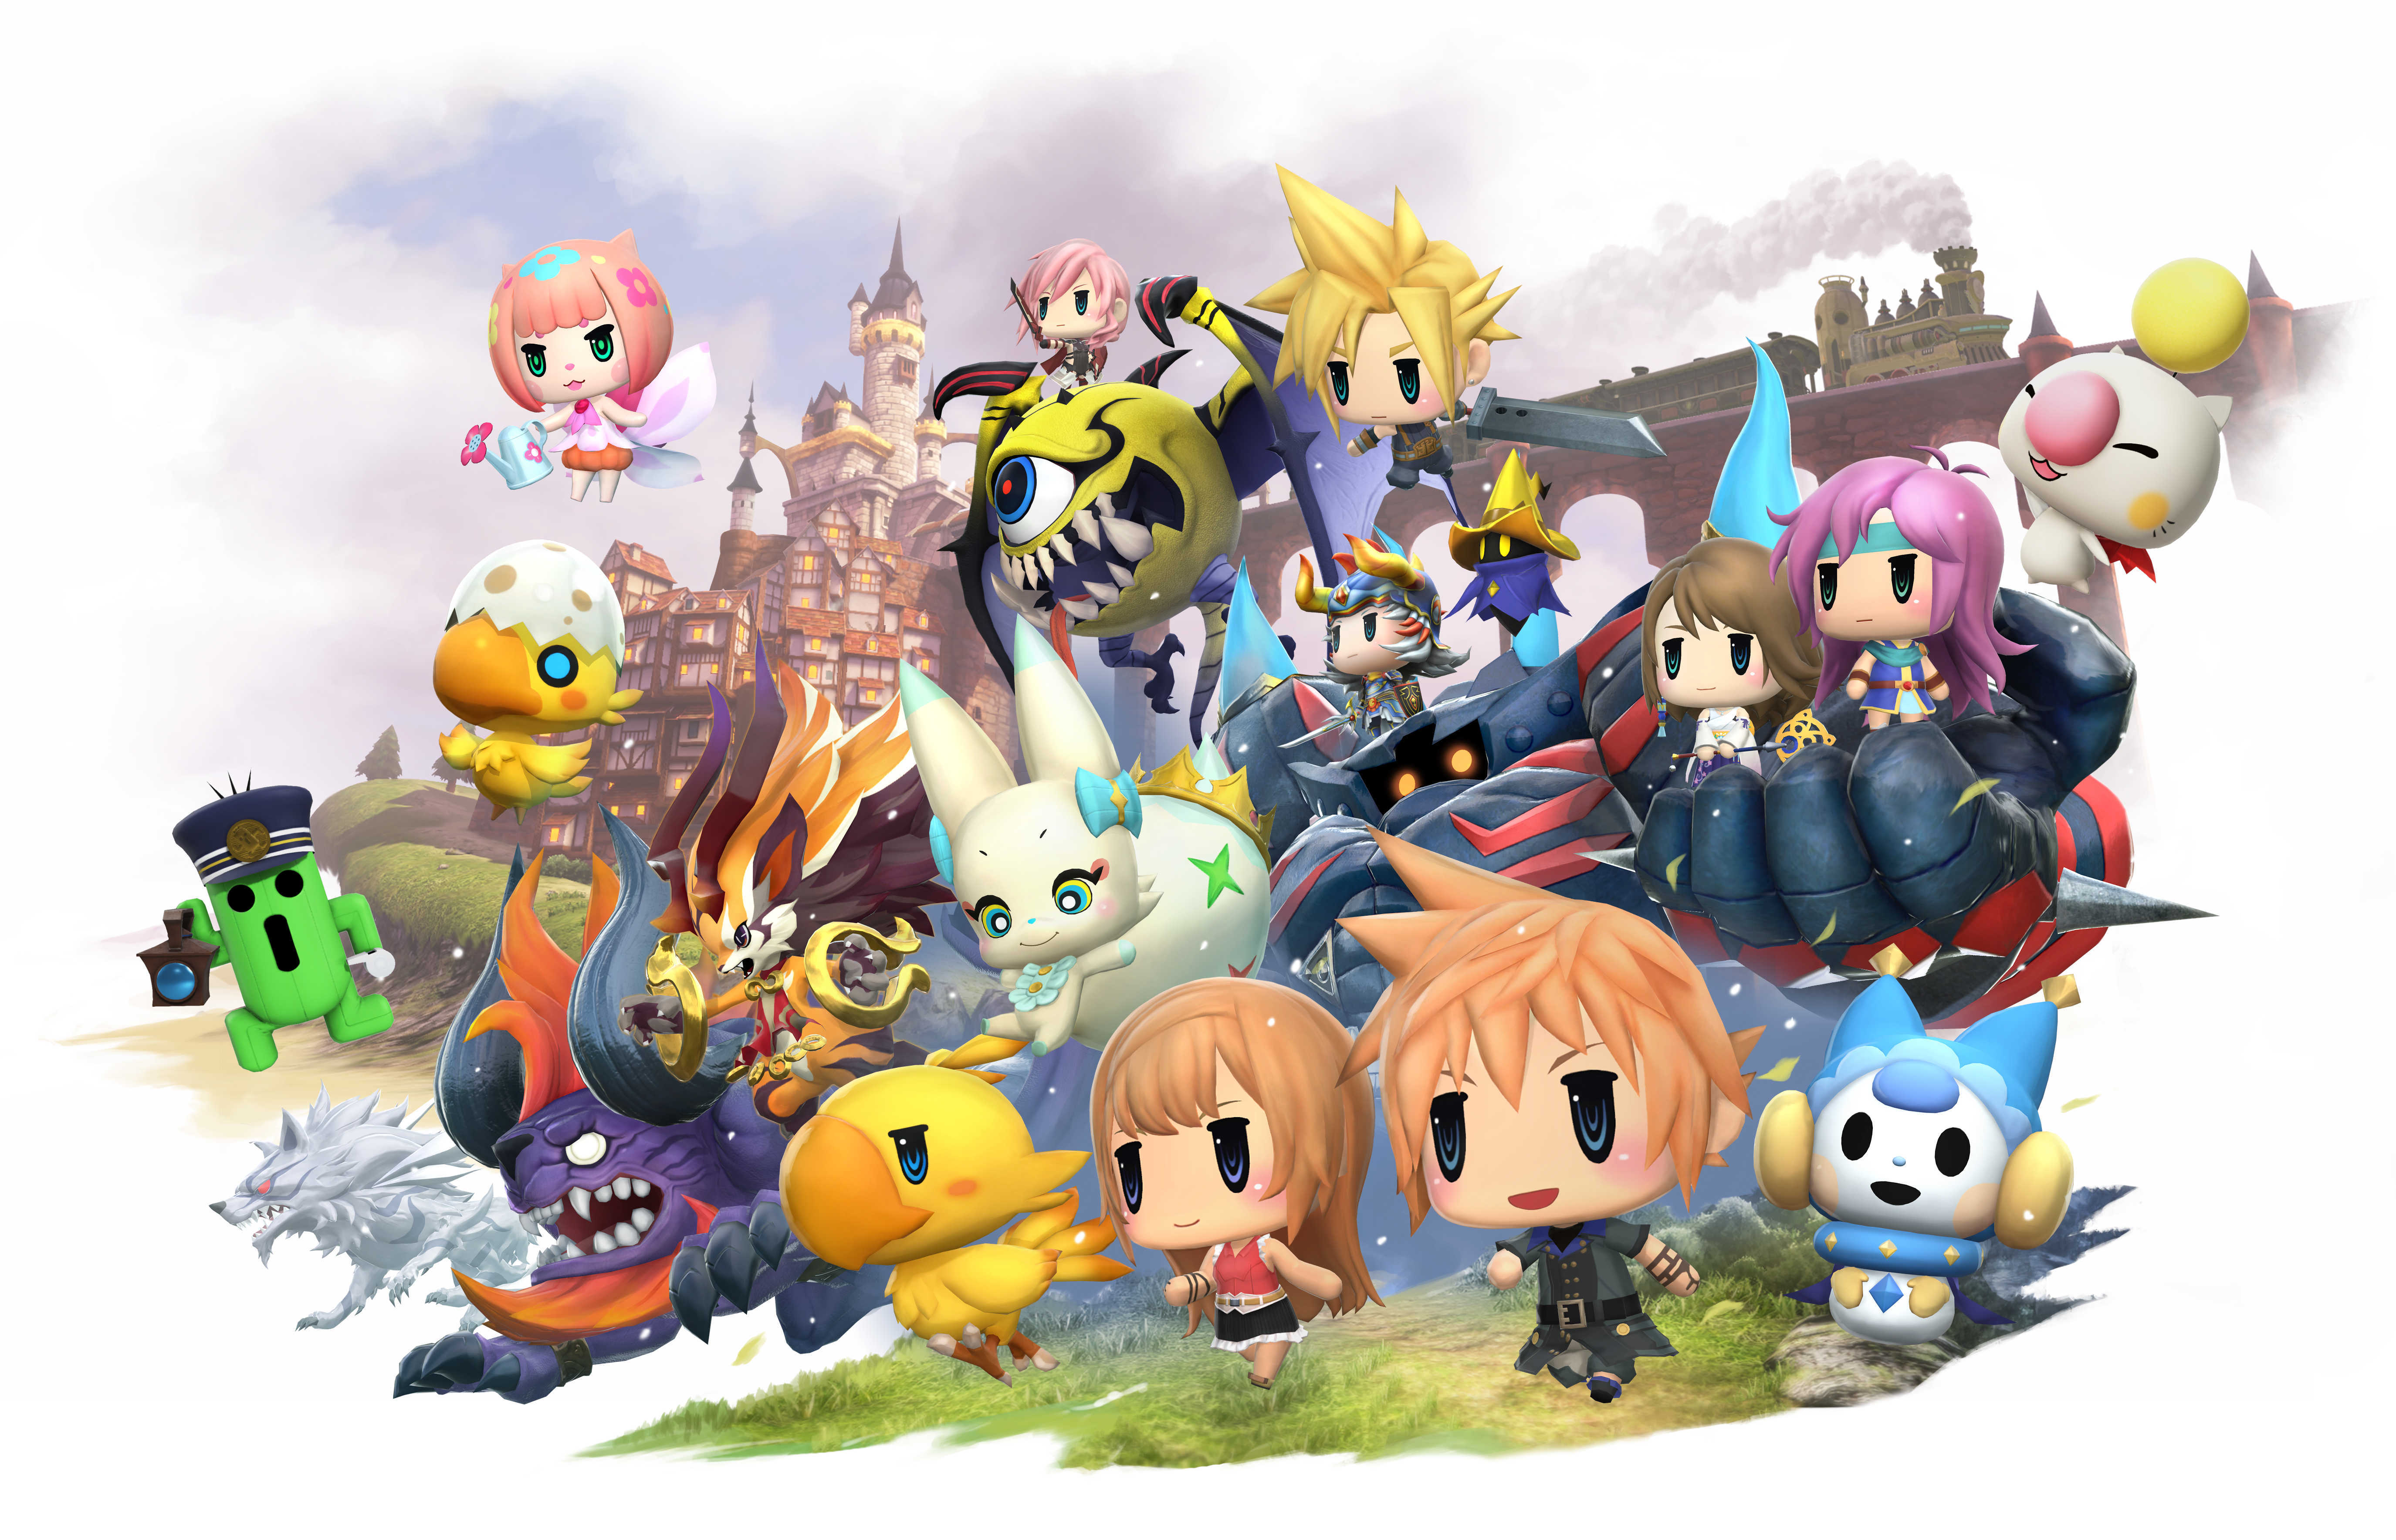 World Of Final Fantasy Maxima Wallpapers - Wallpaper Cave